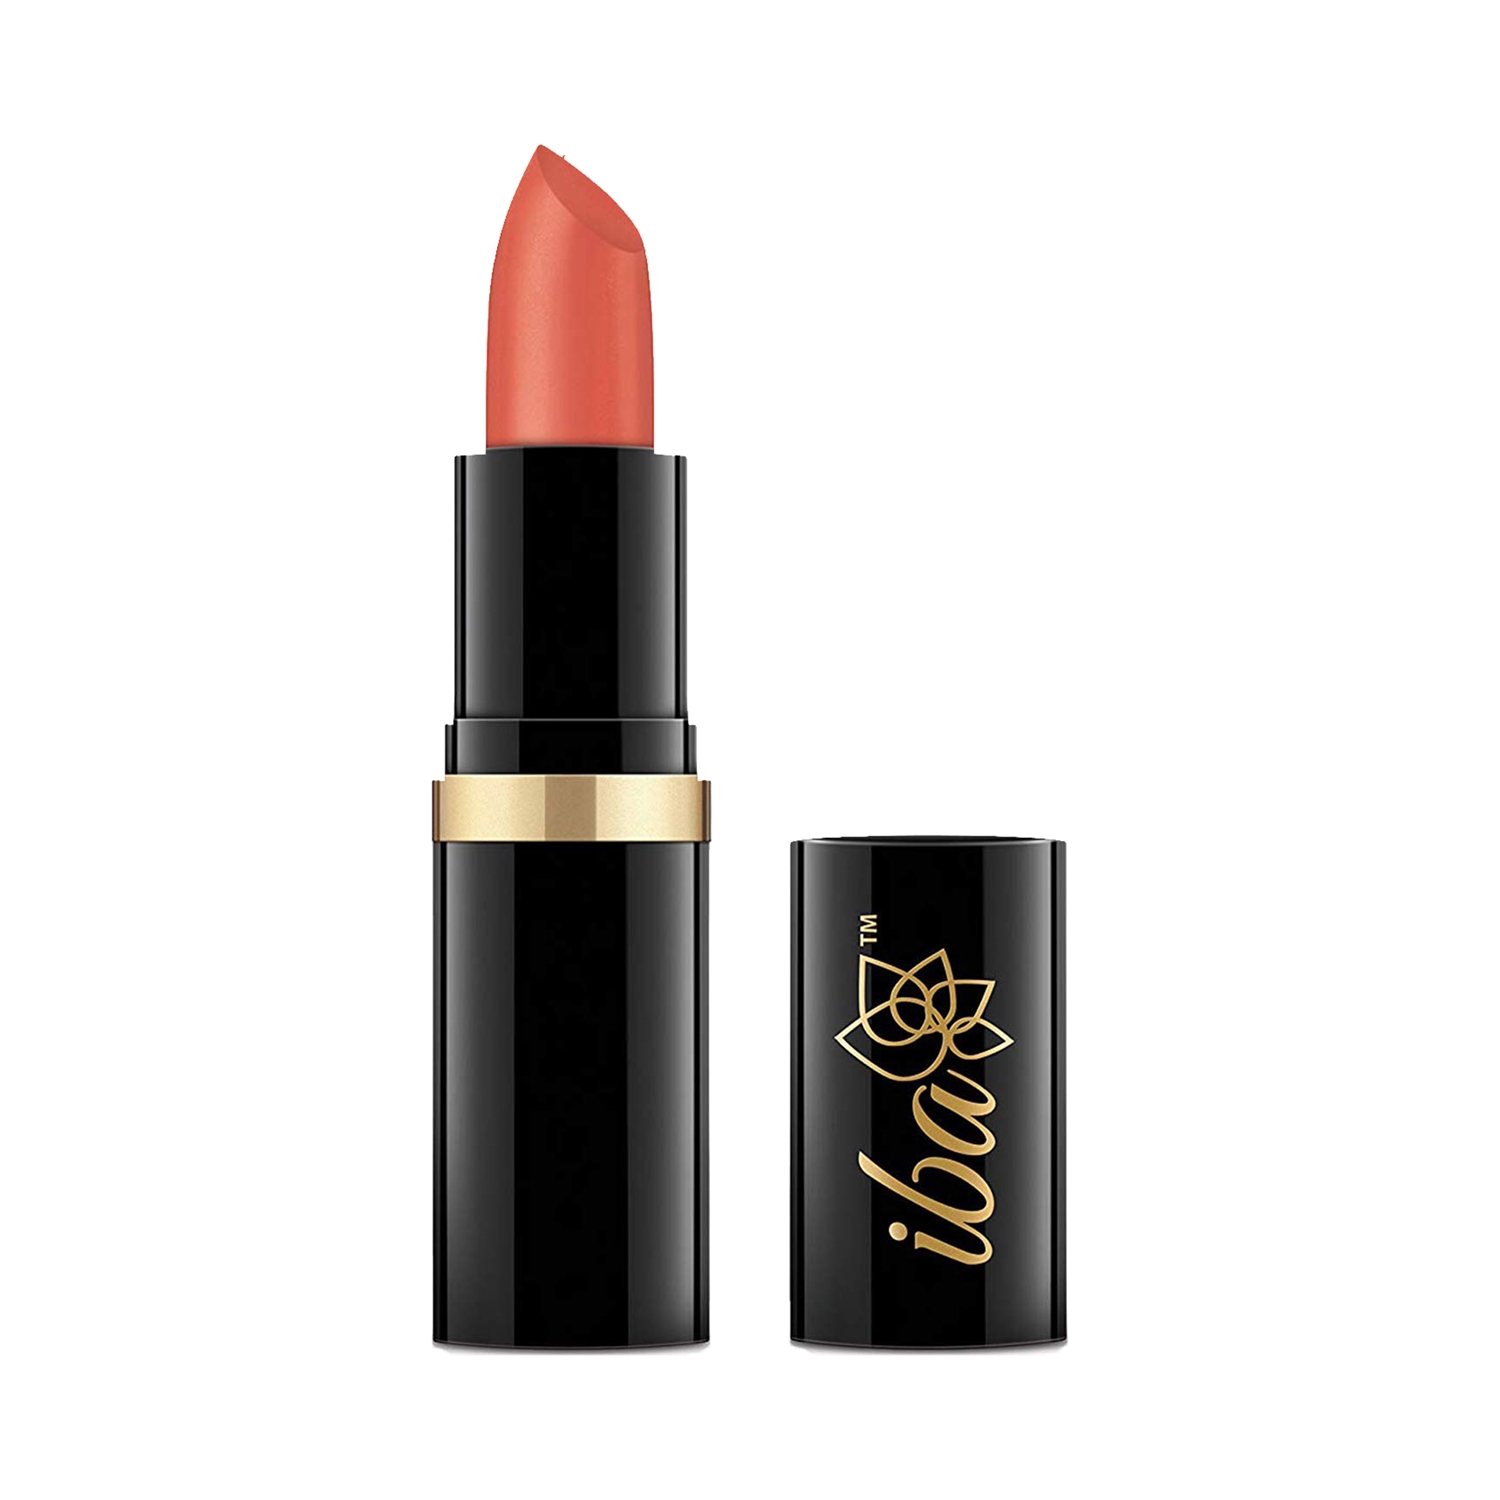 Iba | Iba Pure Lips Moisture Rich Lipstick - A55 Peach Sparkle (4g)